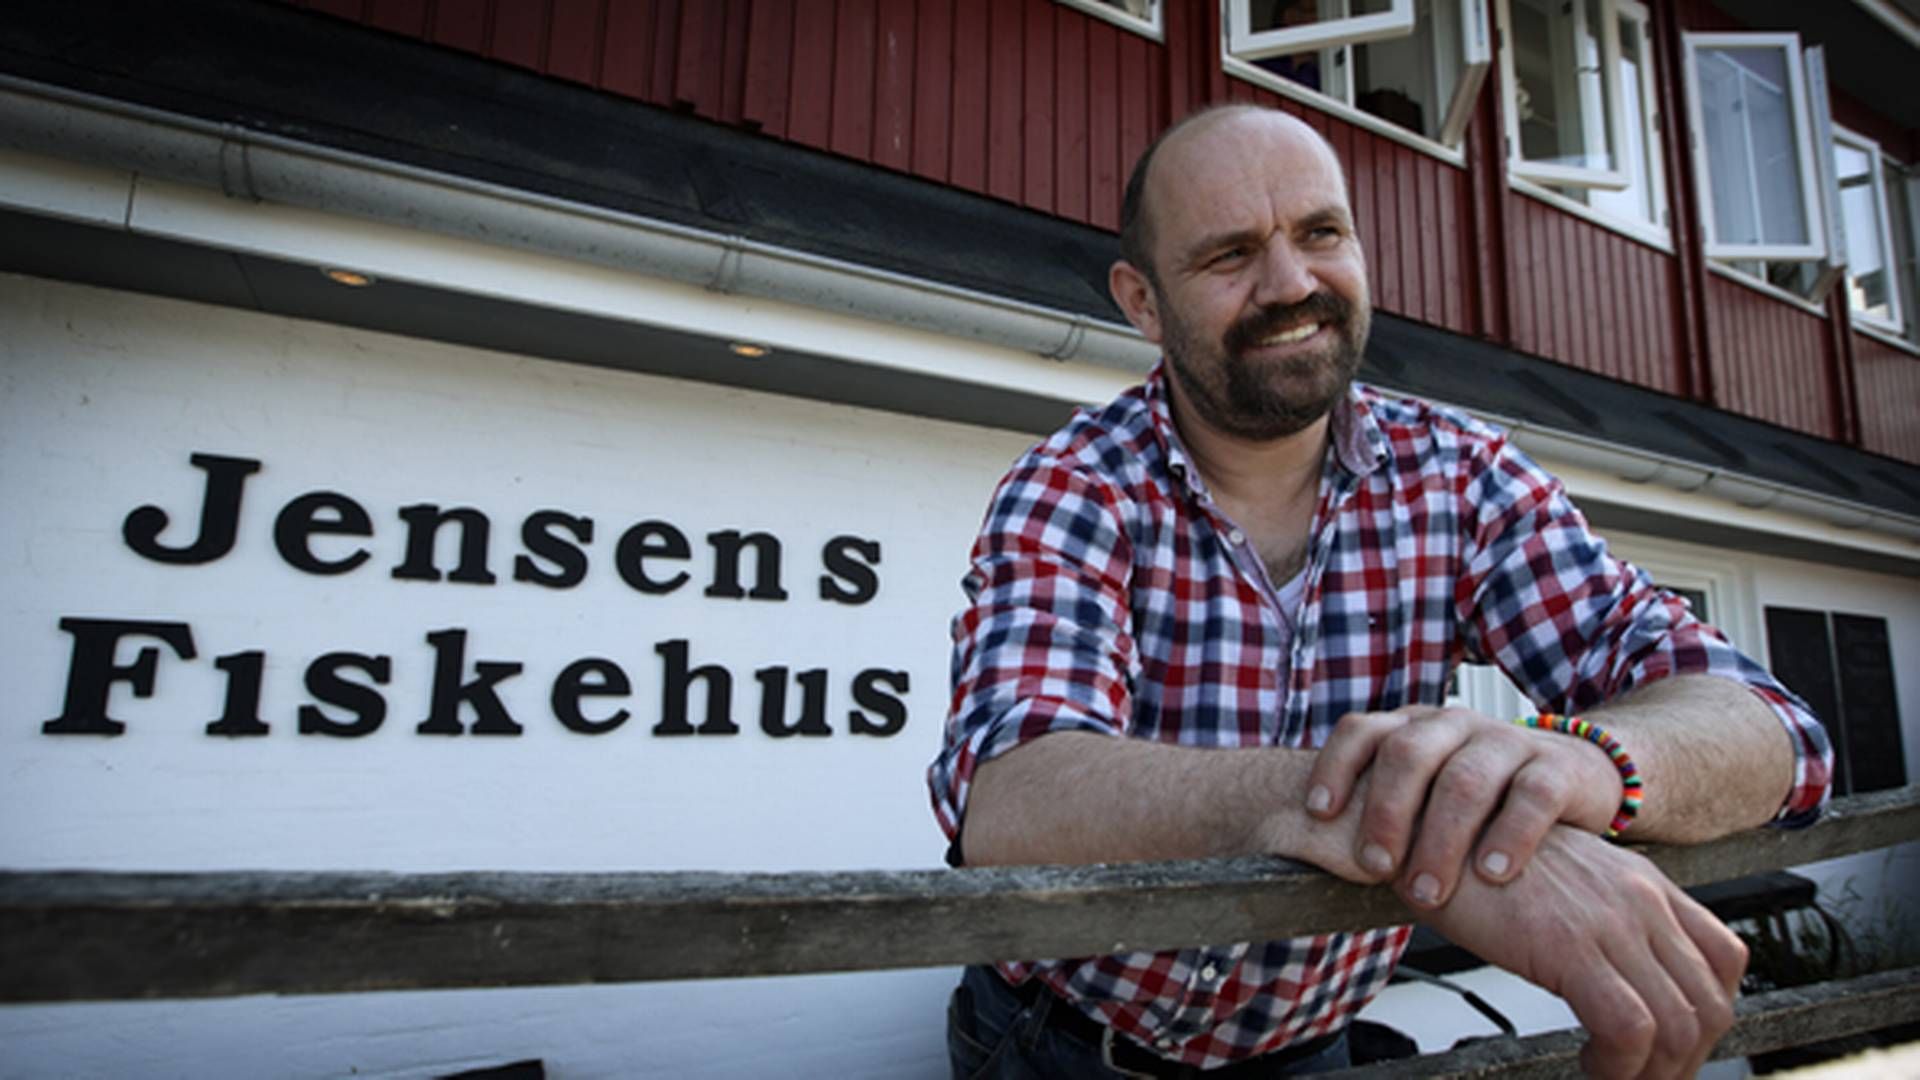 Jacob Jensen foran restauranten i Sæby i 2013, da den hed Jensens Fiskehus. | Foto: Morten Langkilde/Polfoto